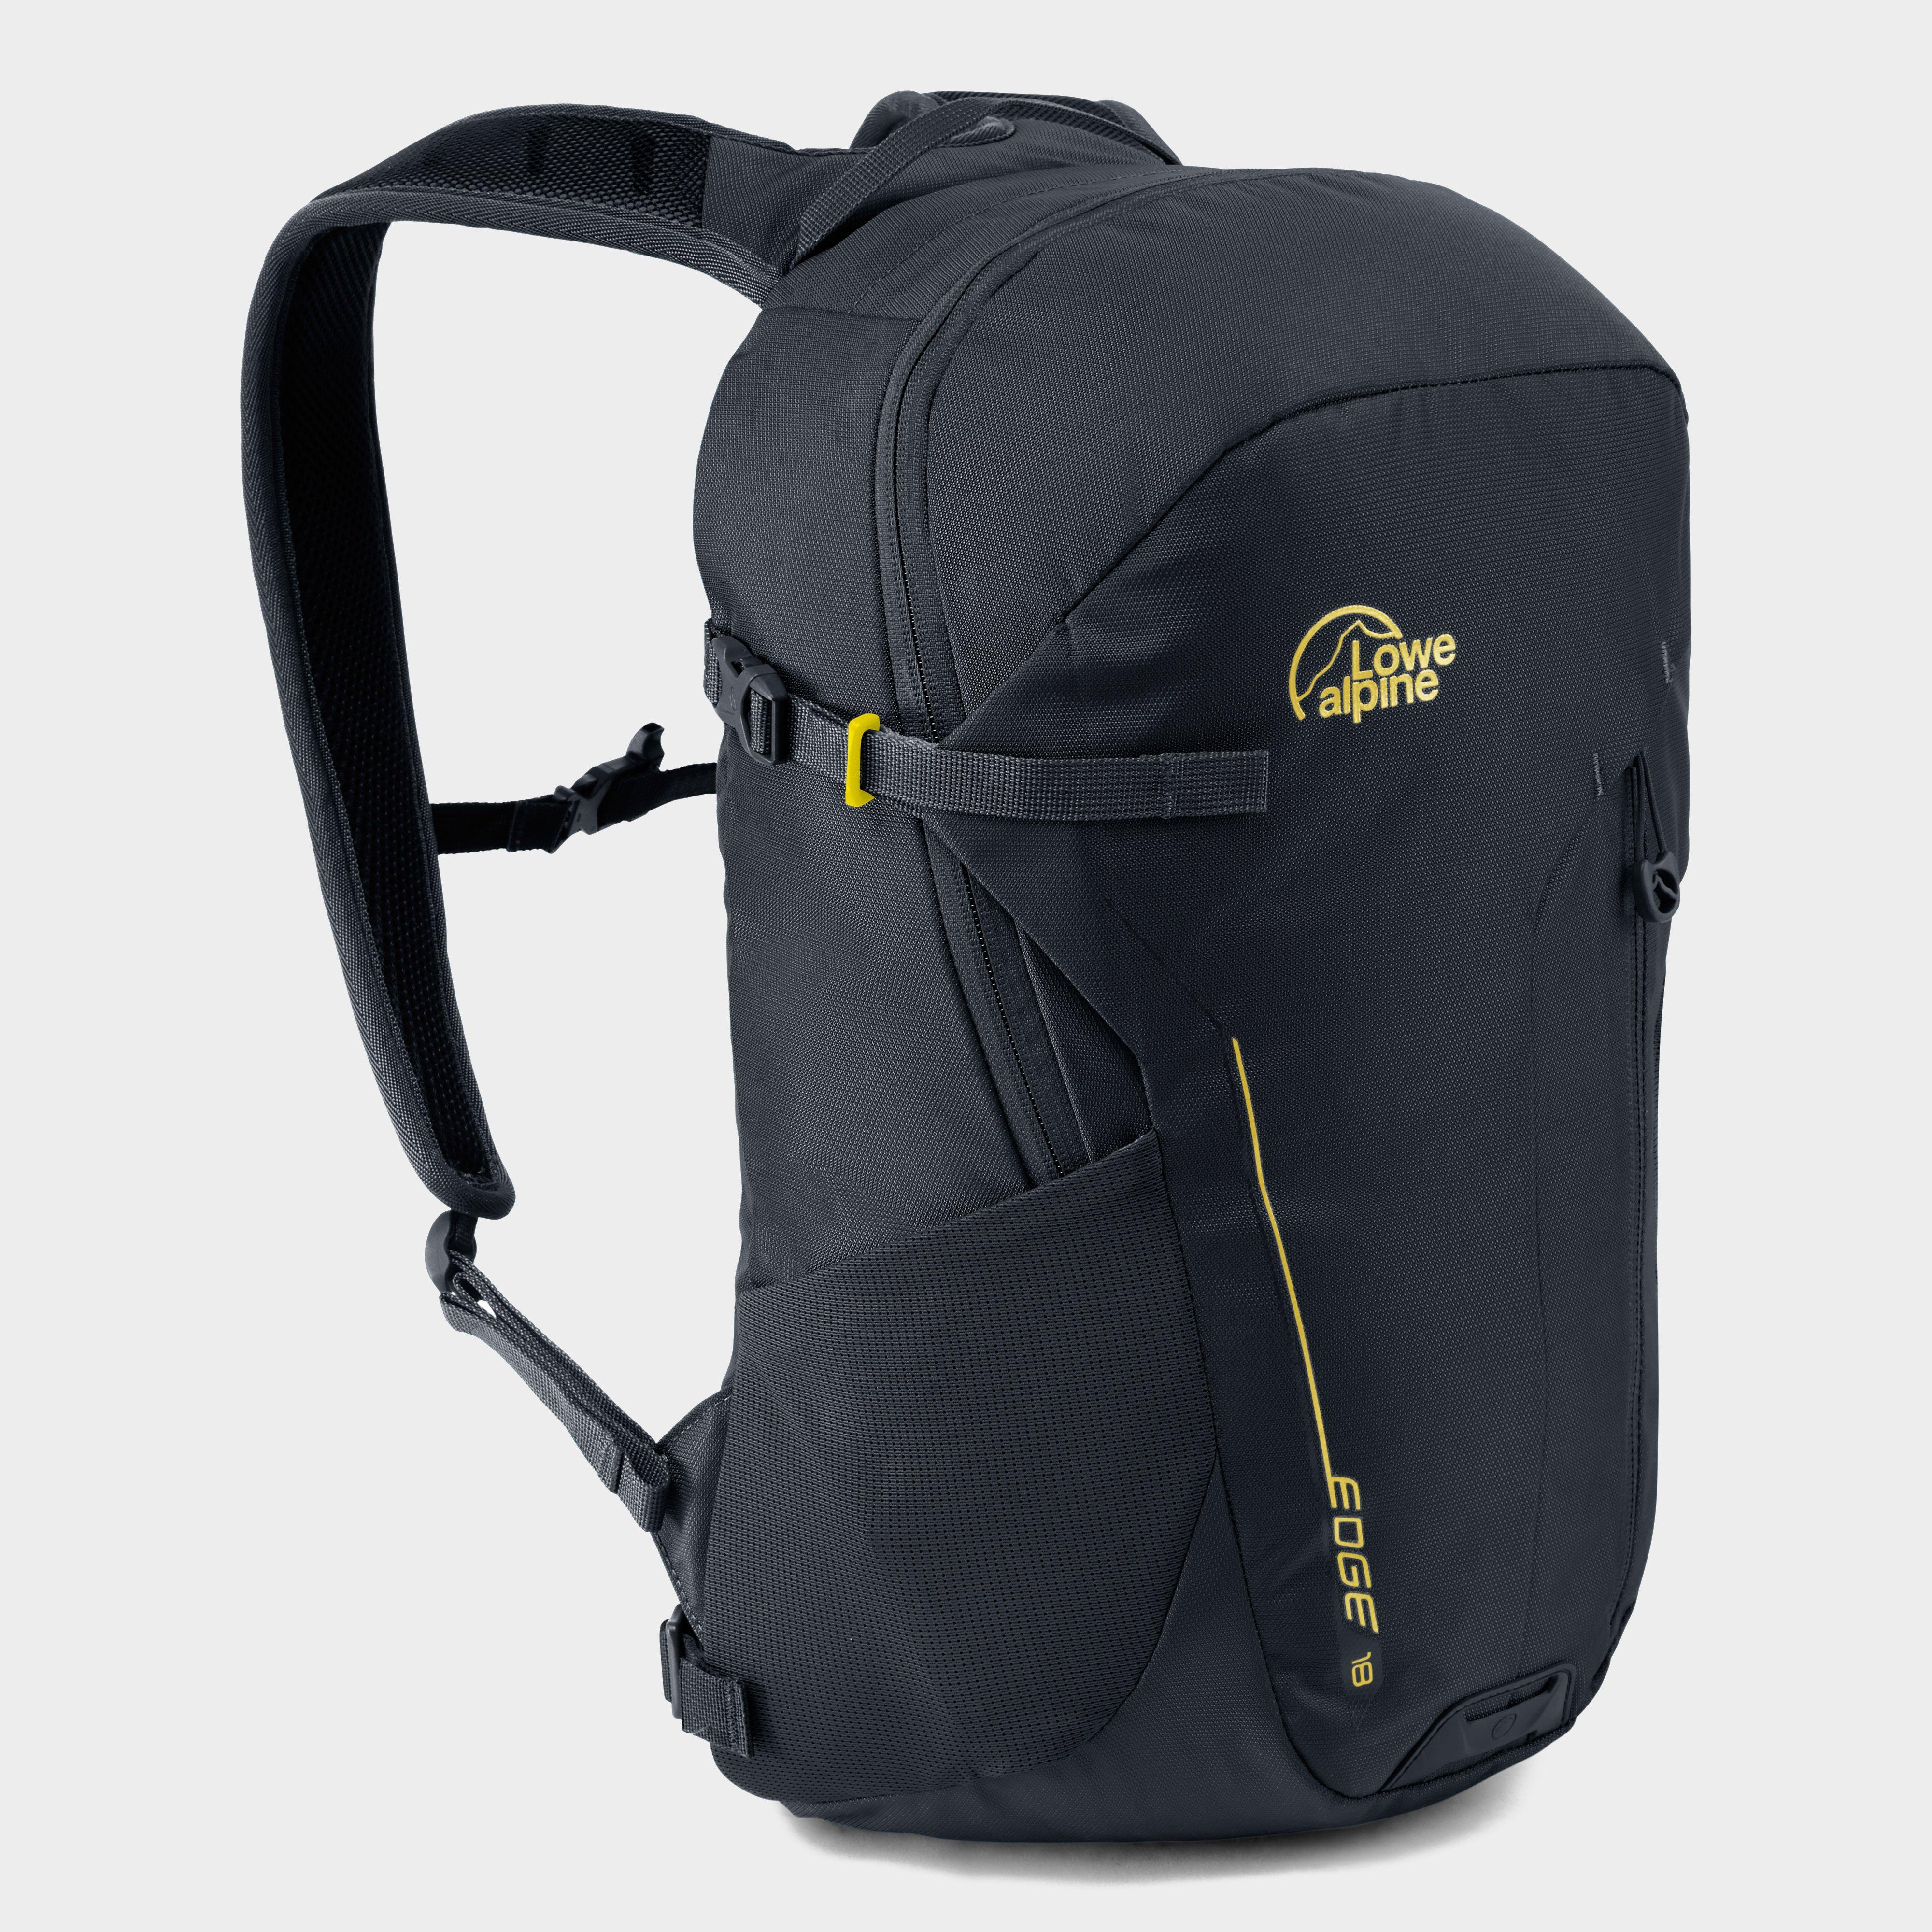 Lowe Alpine Edge 18l Backpack - Black/dgy  Black/dgy